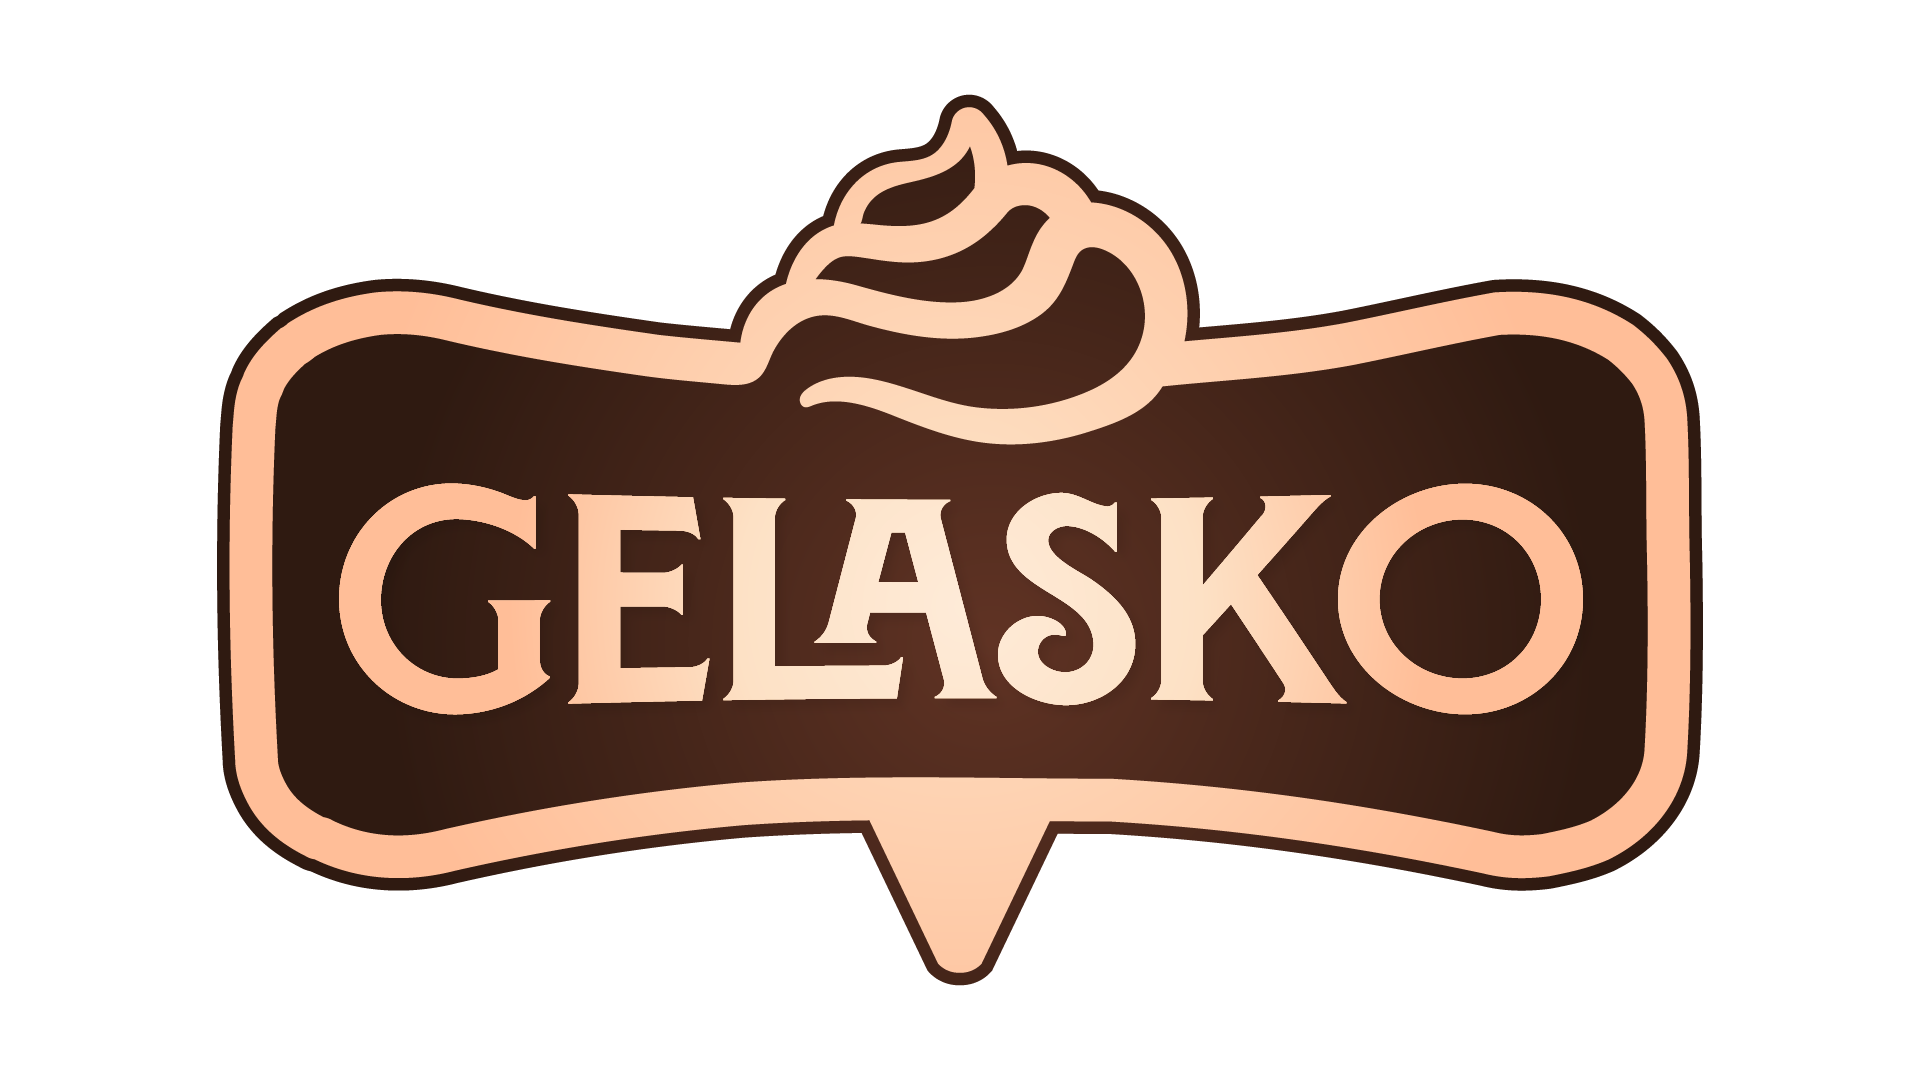 gealsko logo